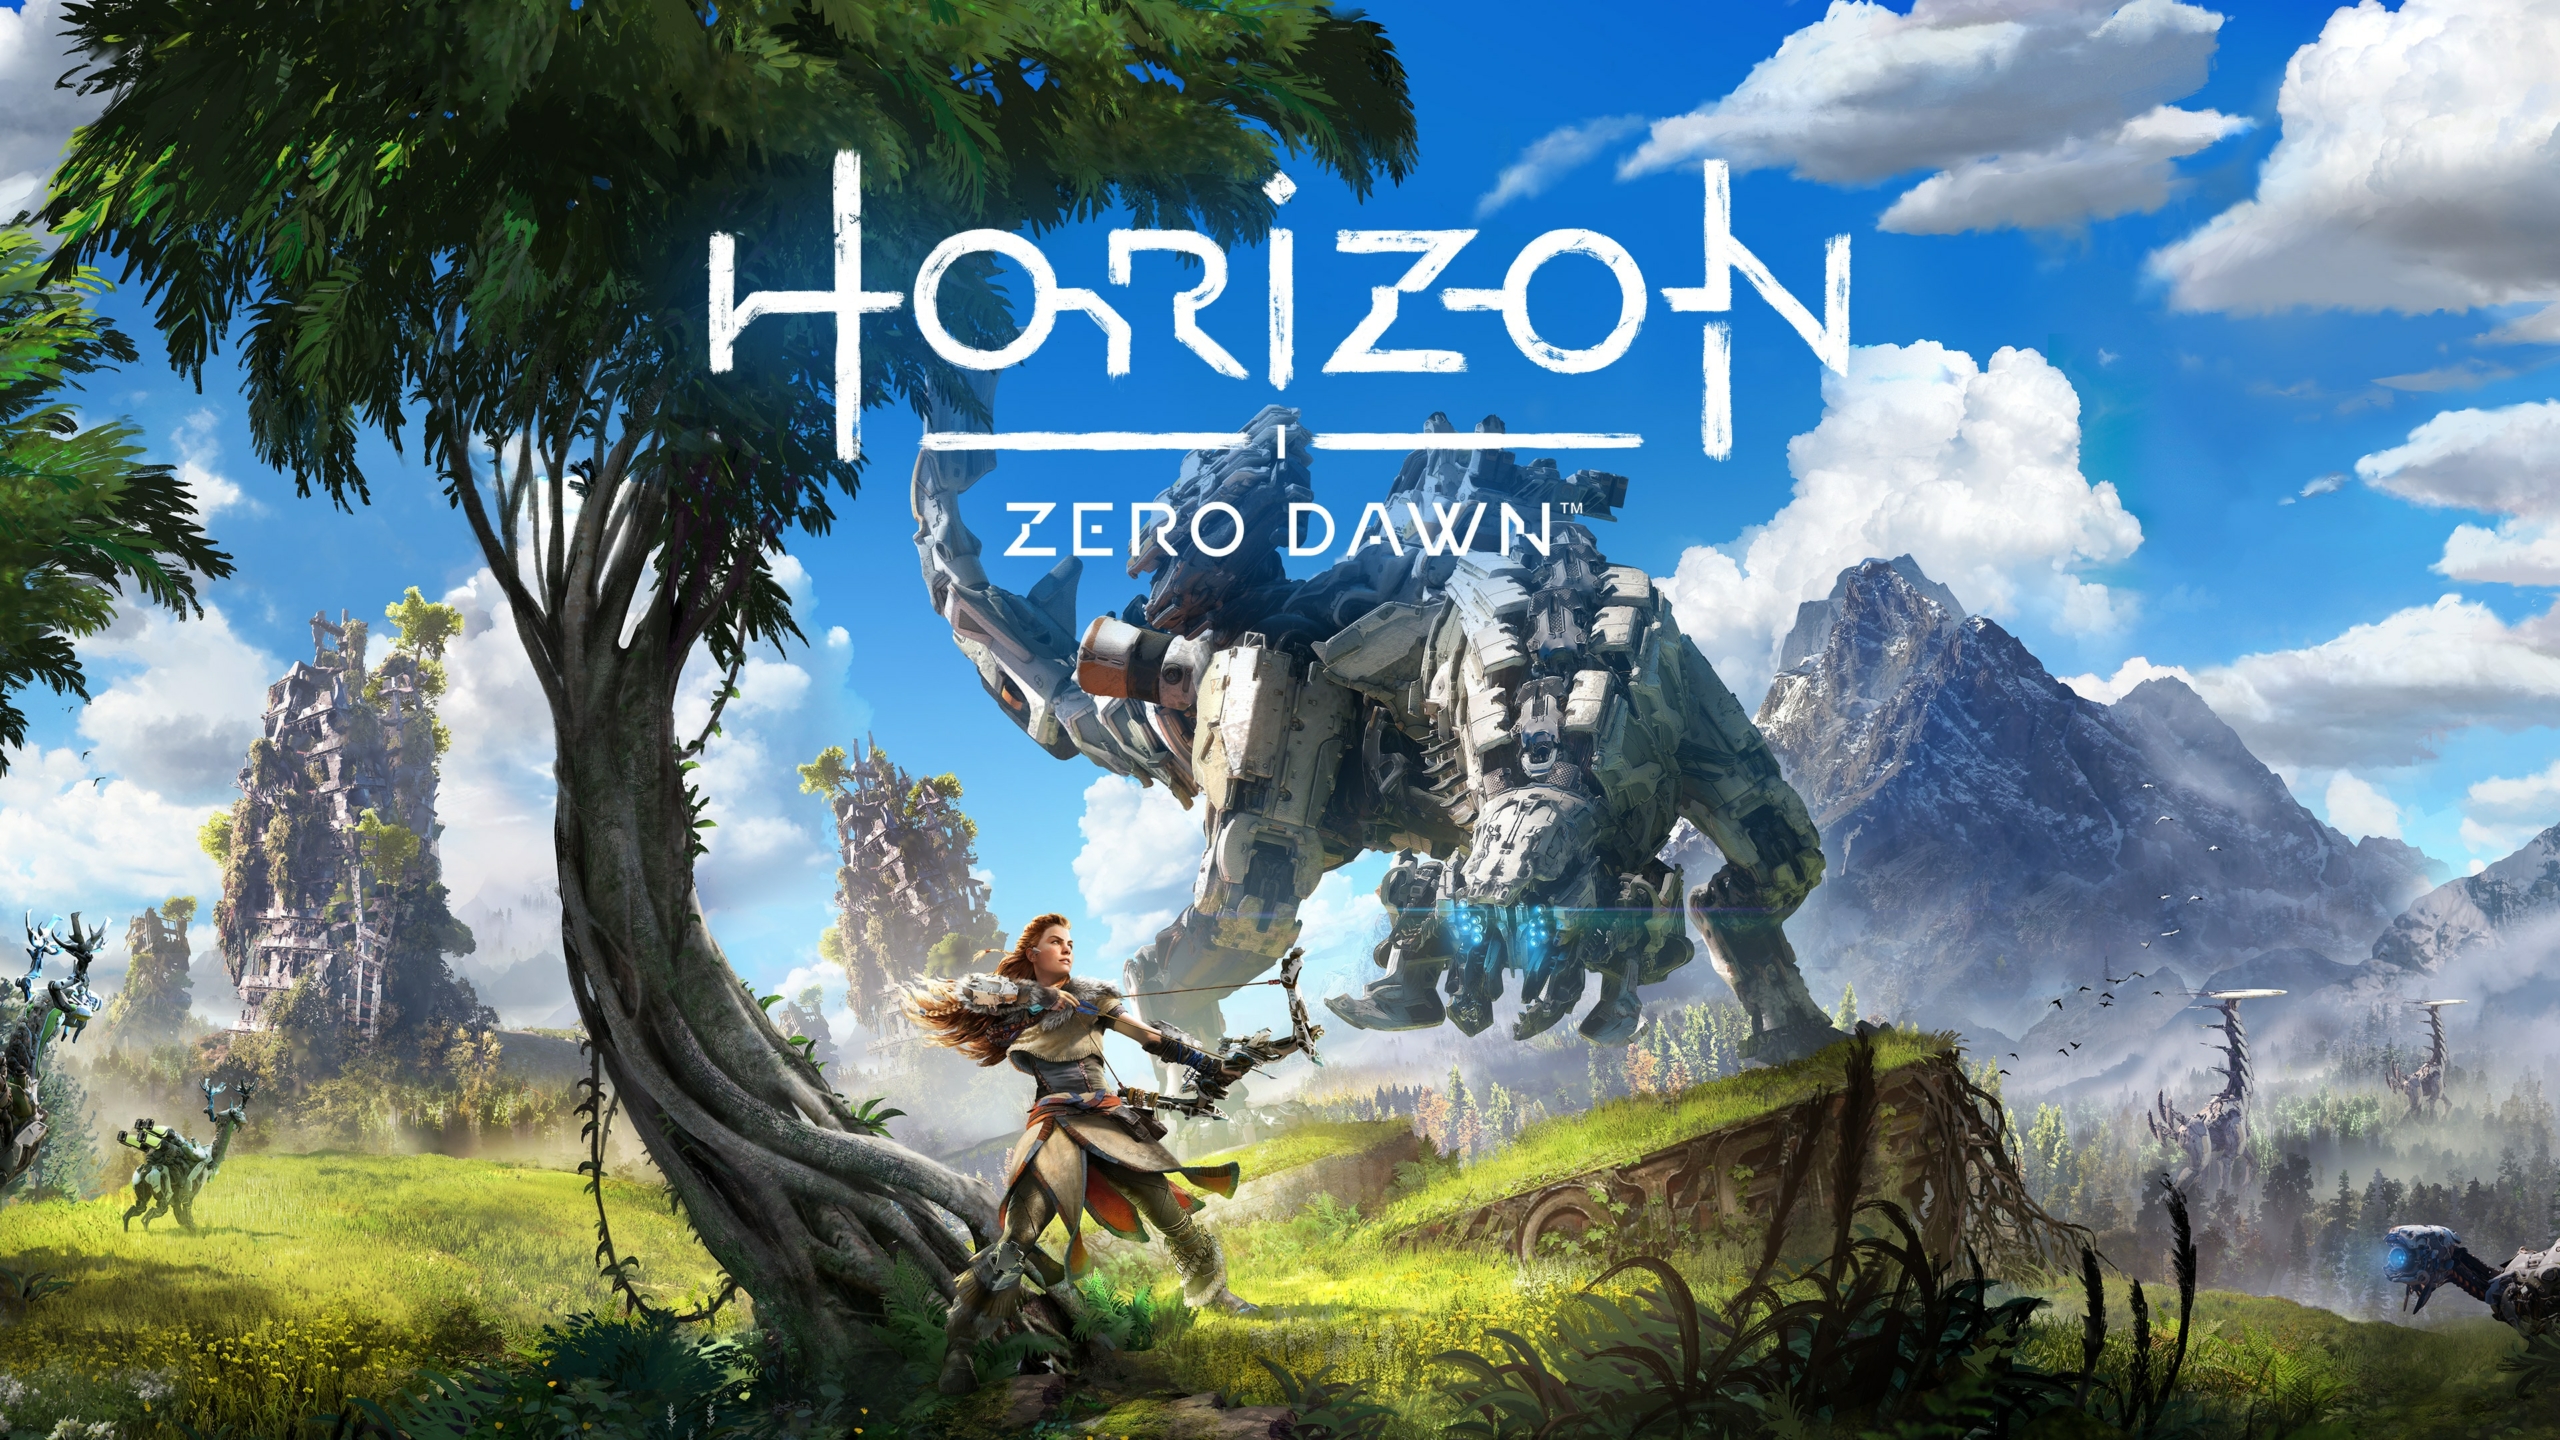 💹 Naperedodni vyhodu prodovžennja prodaži Horizon Zero Dawn sjagnuly 20 mln kopij